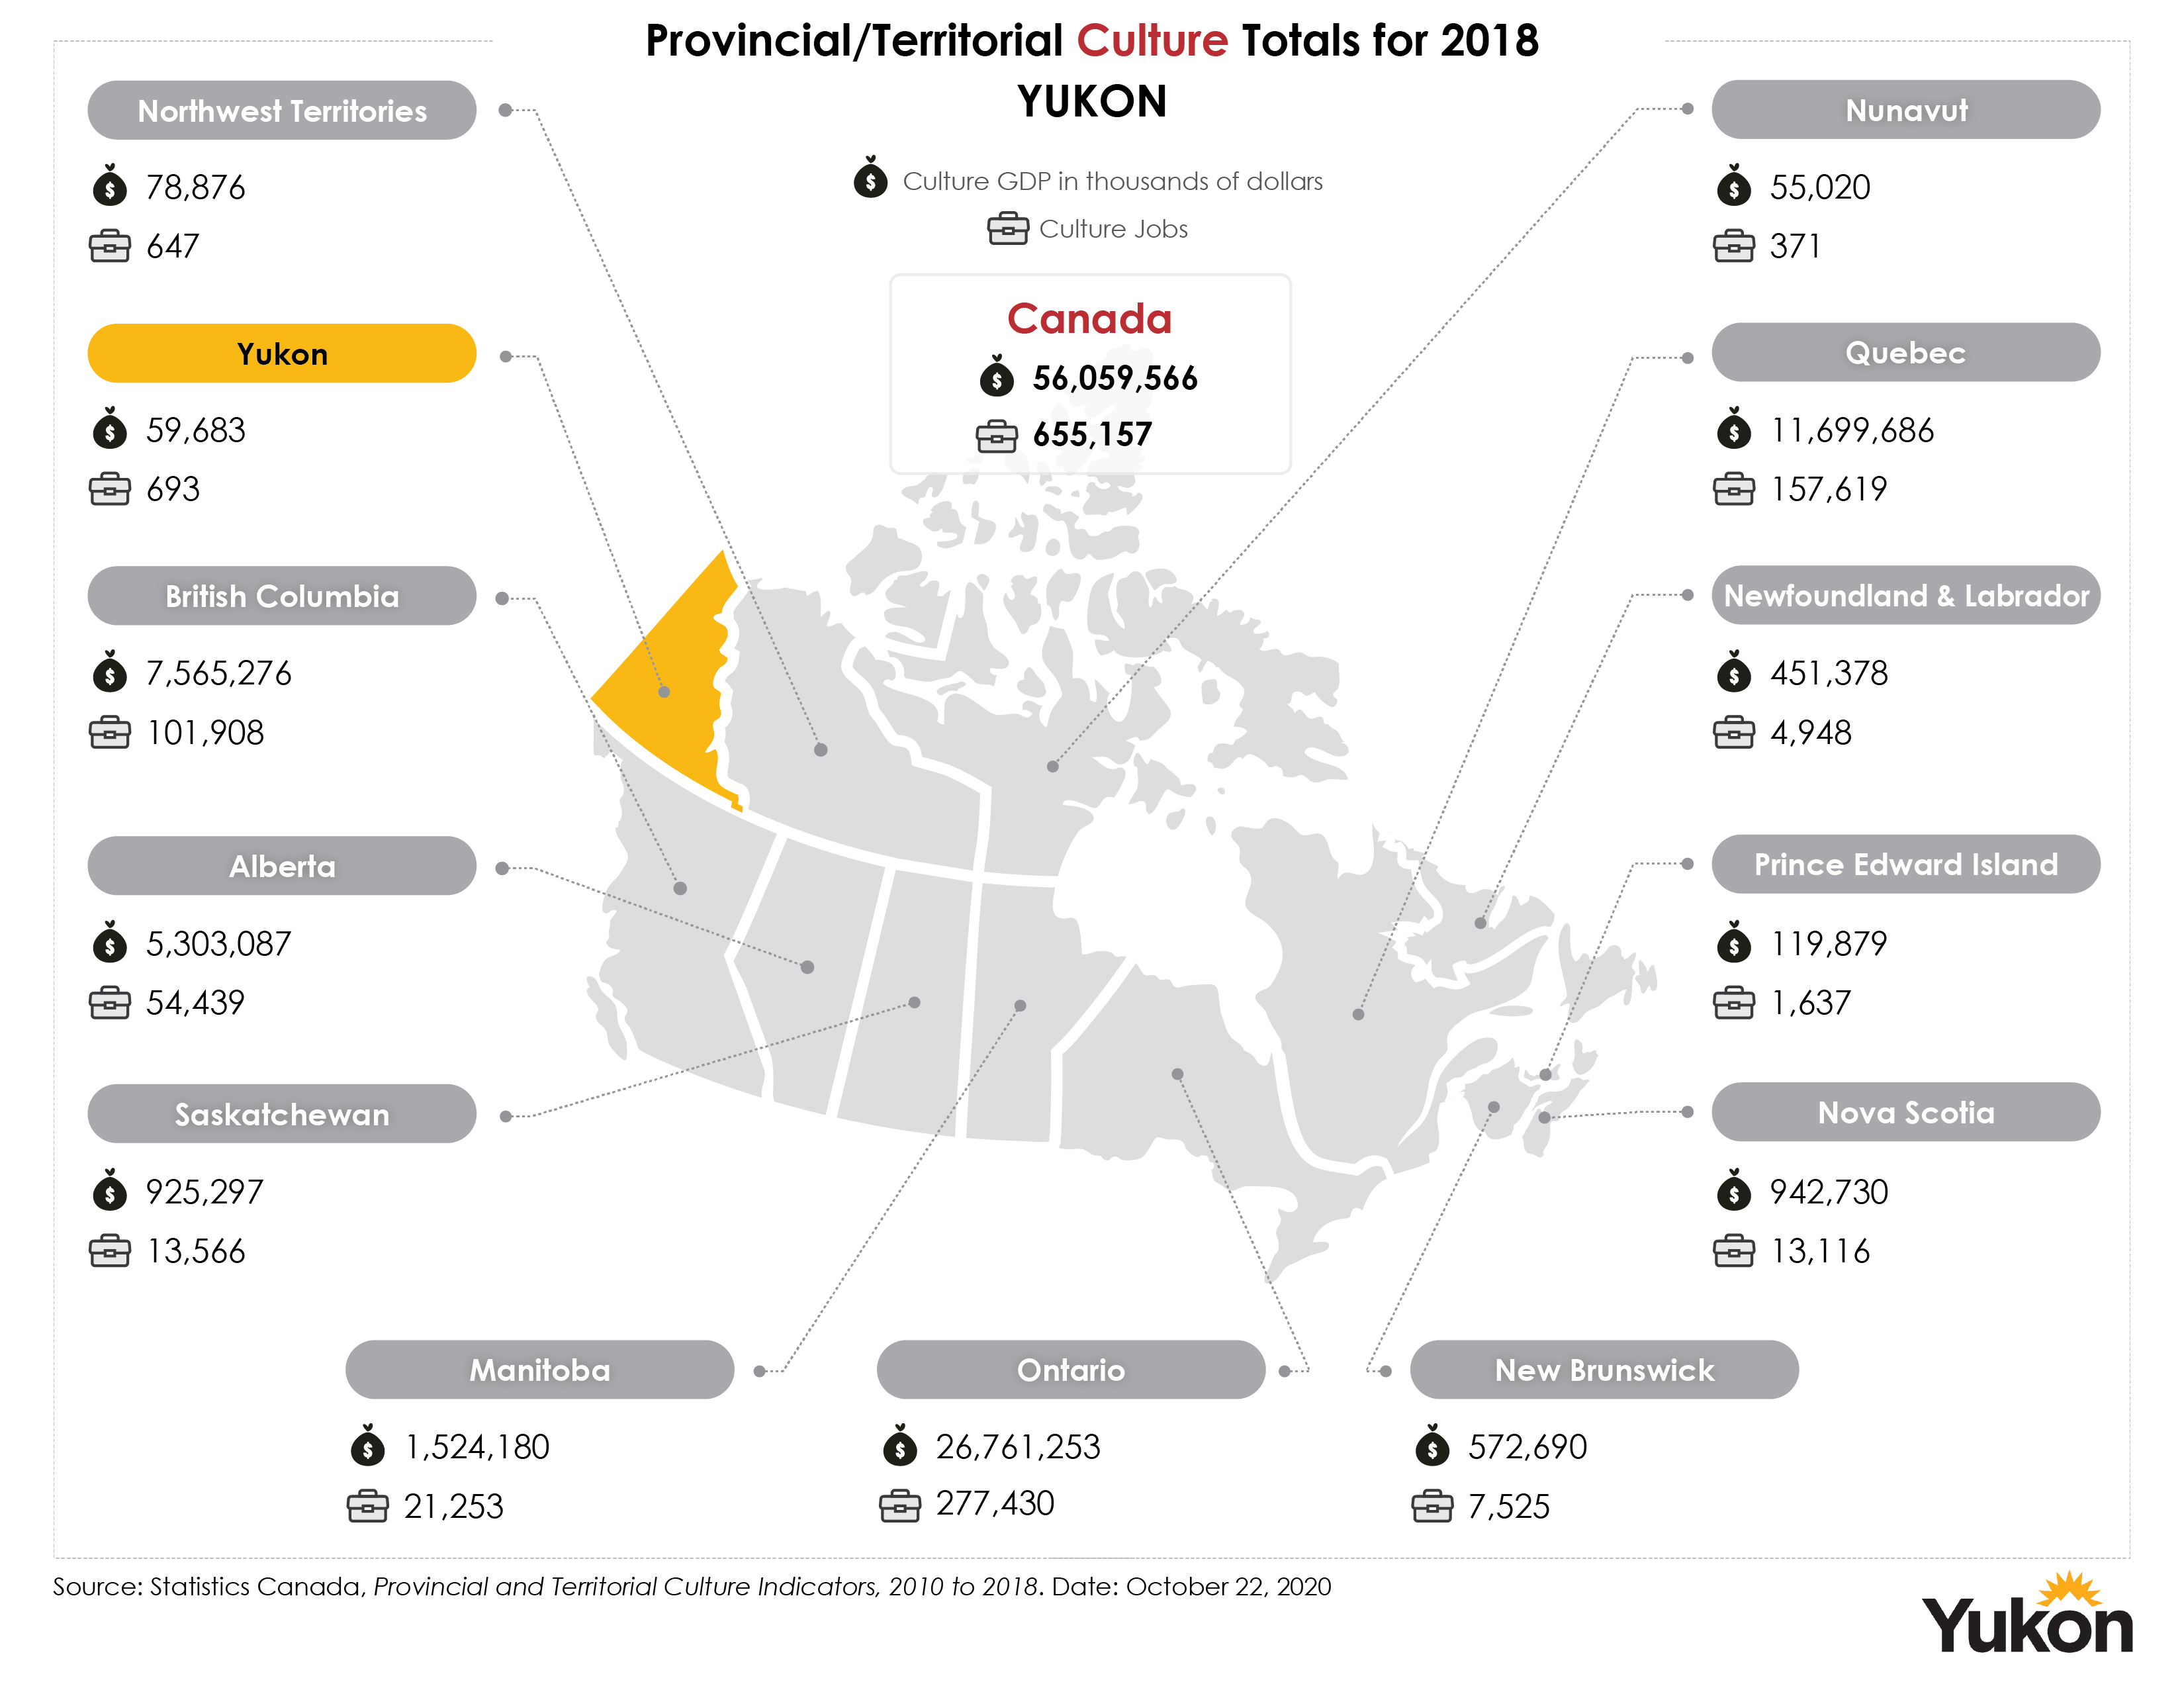 Provincial/Territorial Culture Totals for 2018: Yukon